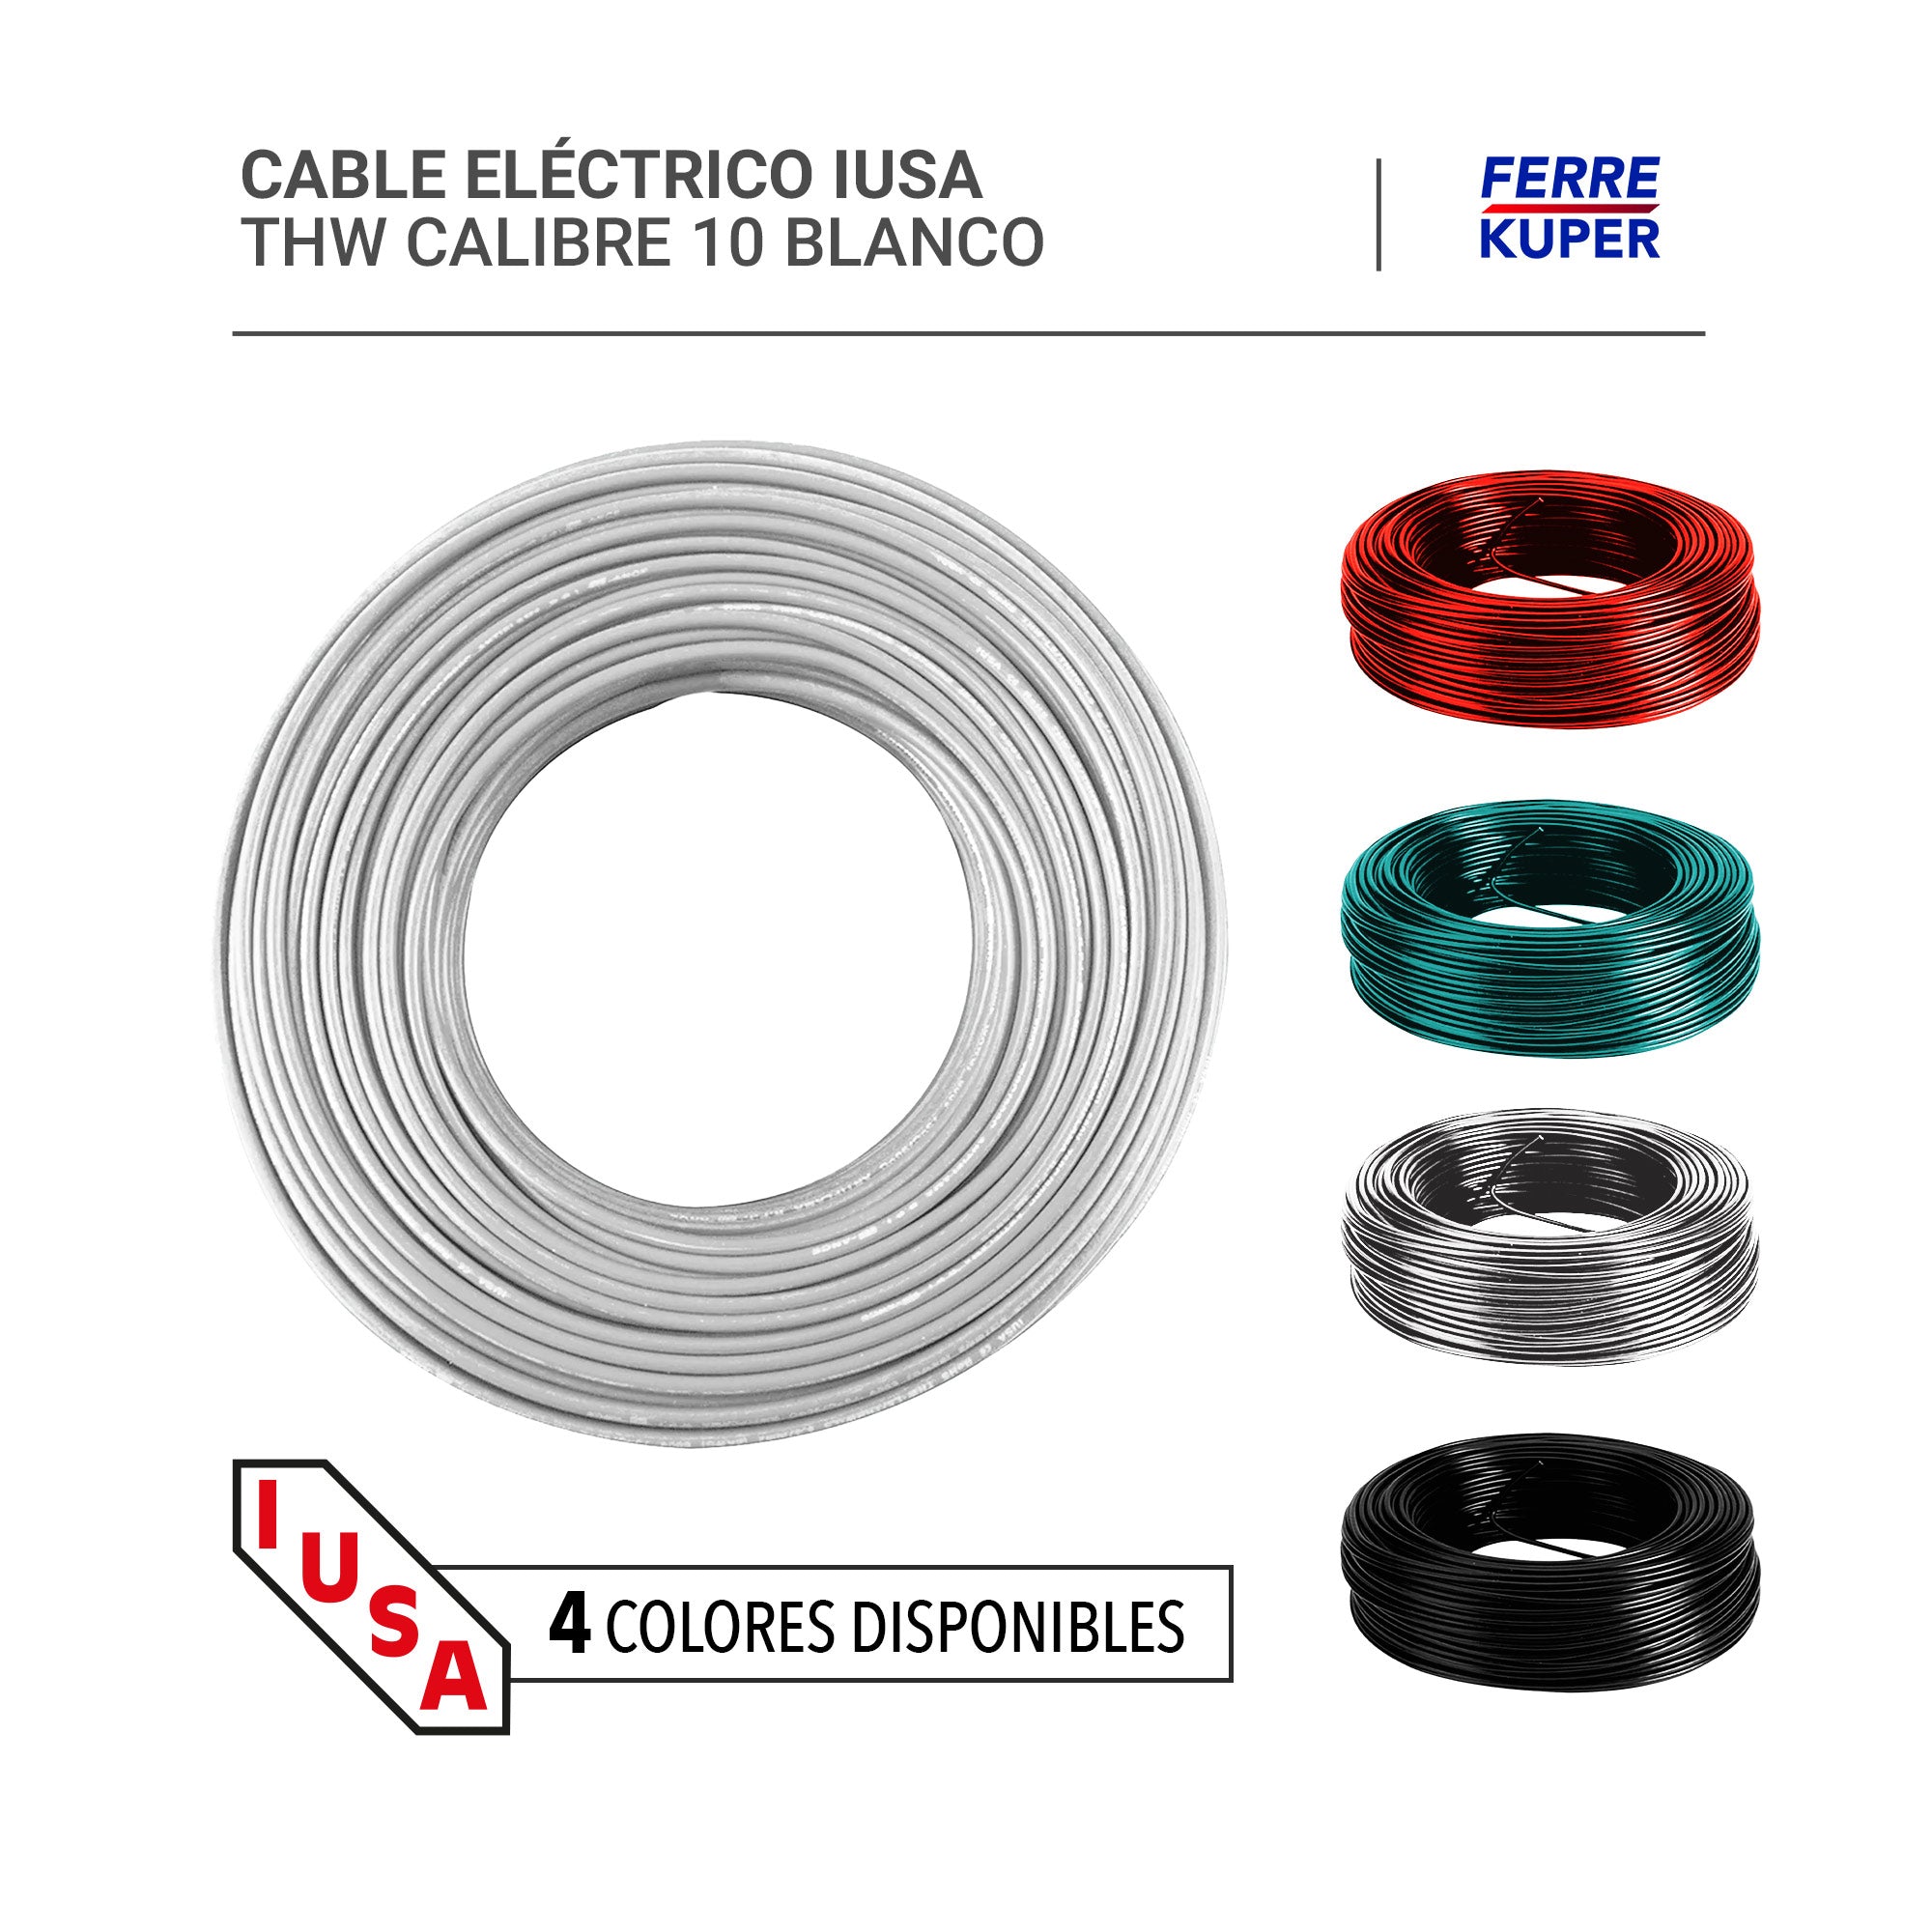 Cable Eléctrico IUSA THW Calibre 10